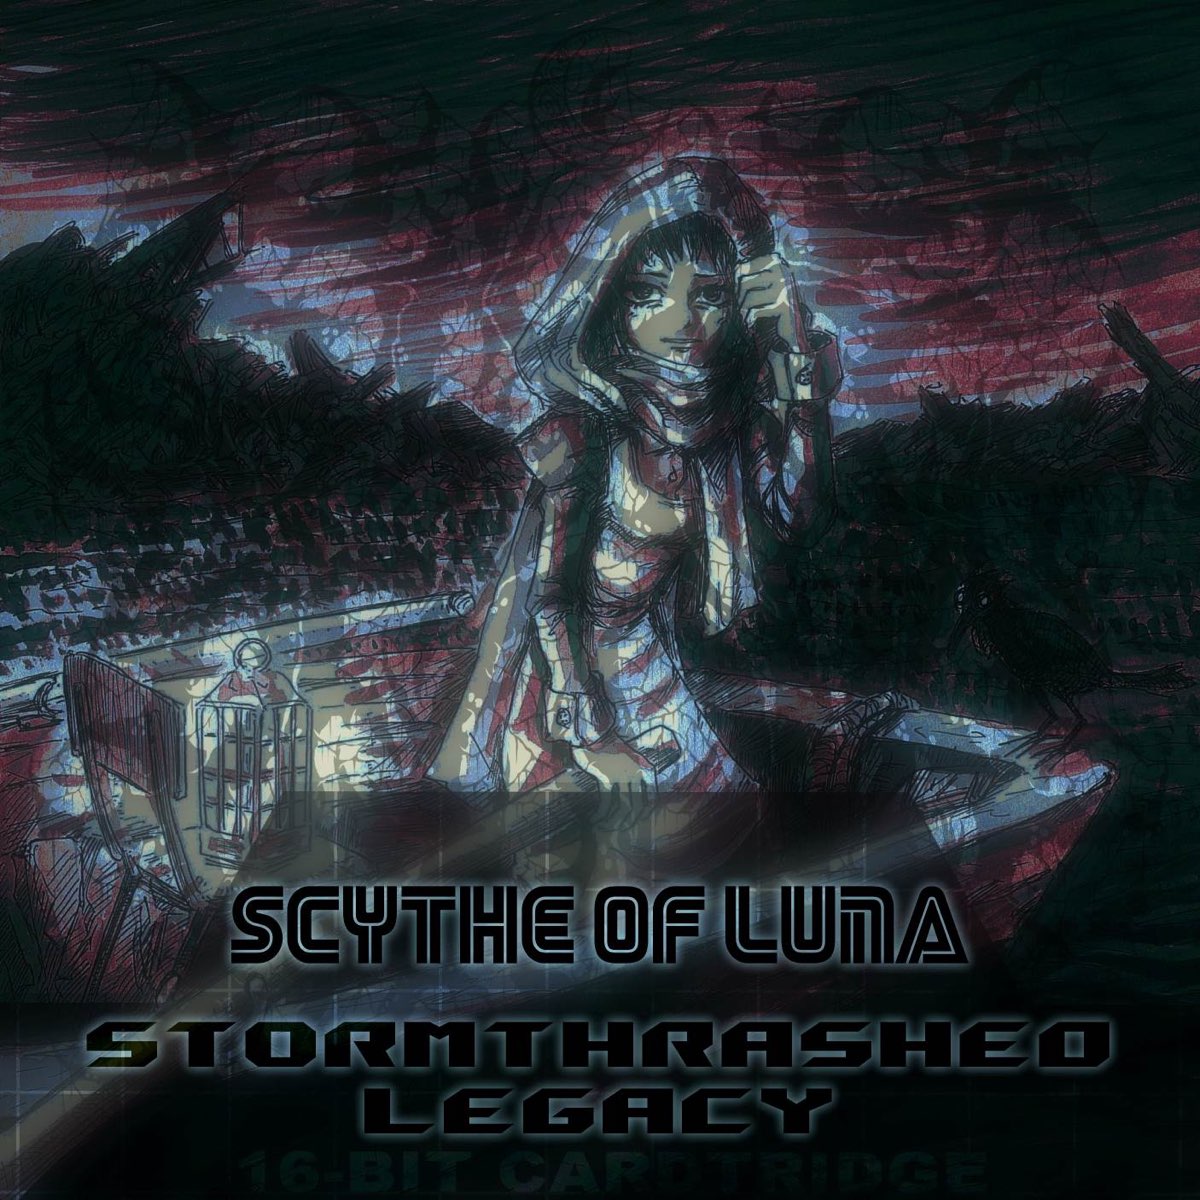 Stormthrashed Legacy de Scythe of Luna en Apple Music